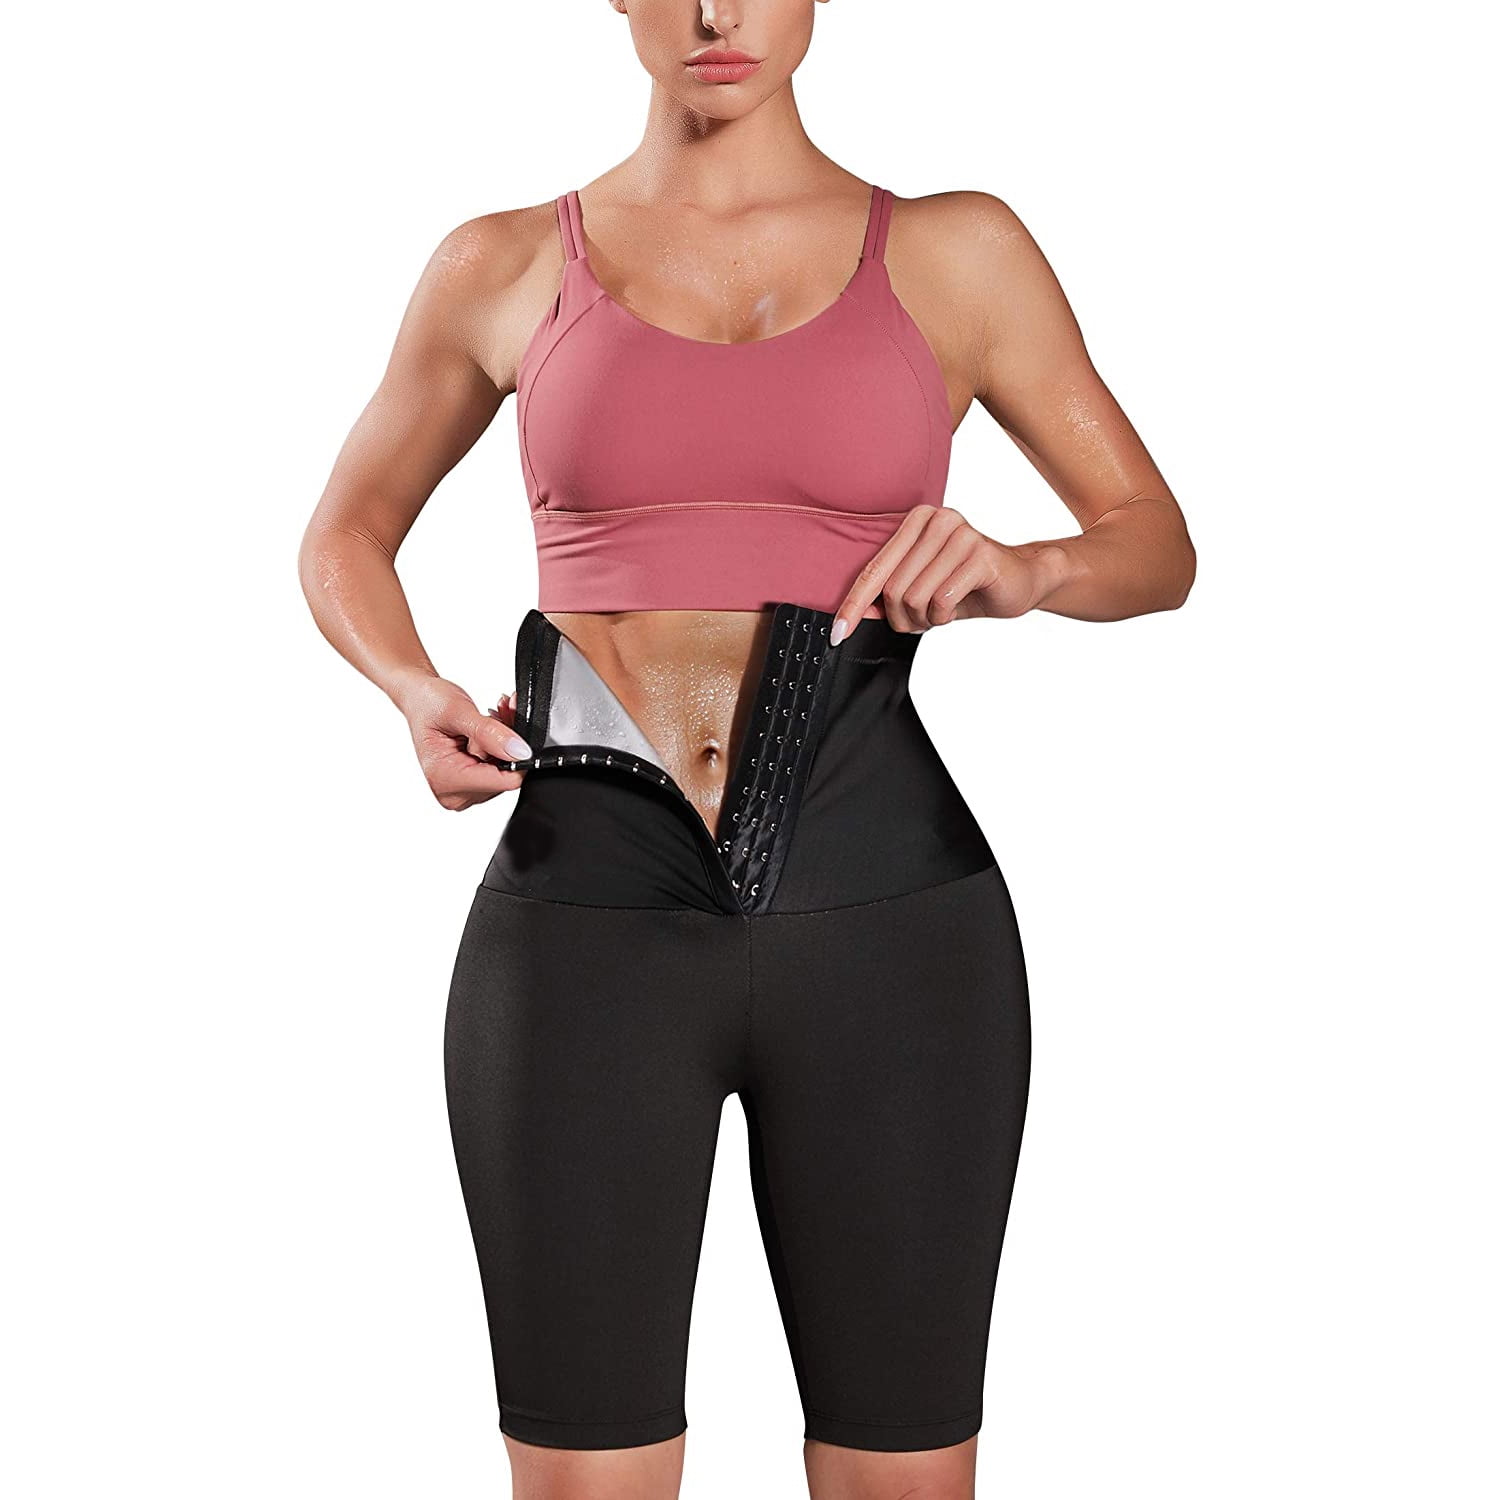 Women Shaper Sweat Sauna Pants Shorts Fitness Trainer Fat burning Training 